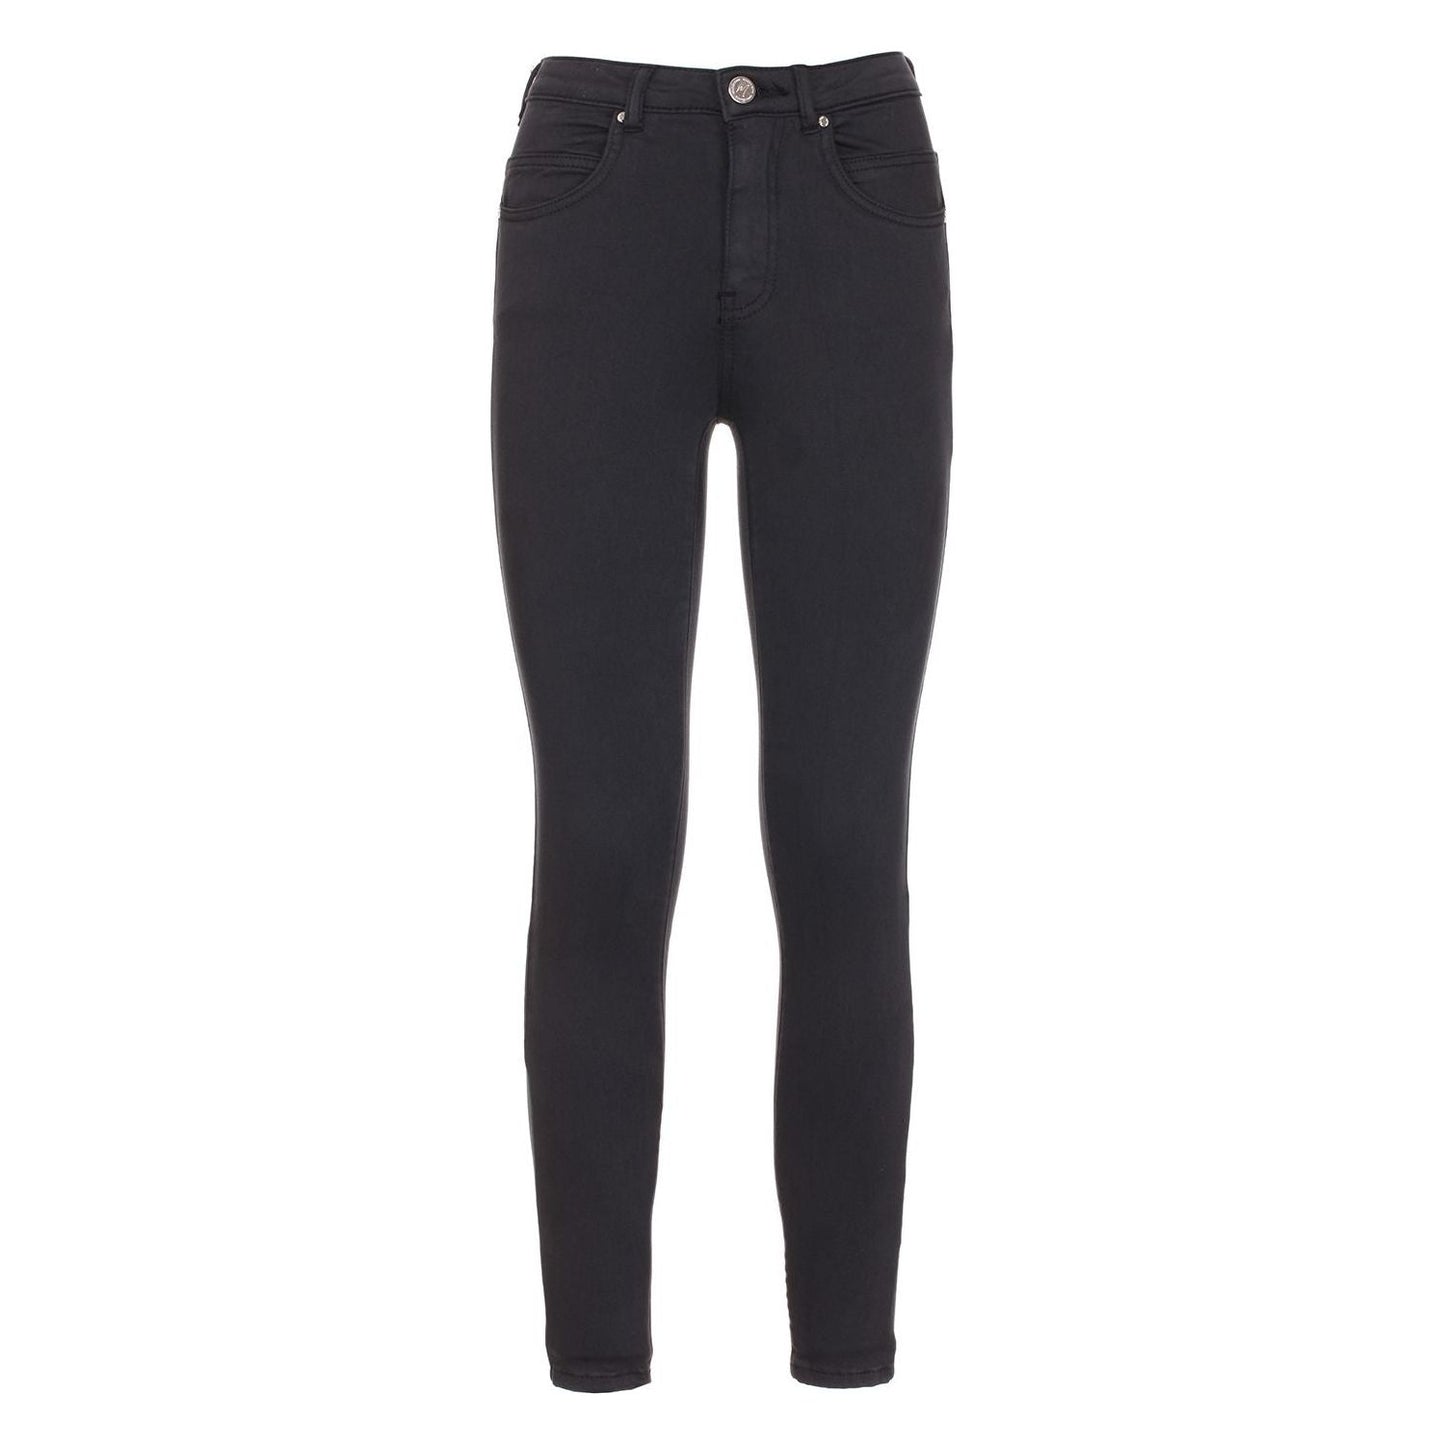 Maison Espin Chic High-Waist Super Skinny Olivia Pants Jeans & Pants black-cotton-jeans-pant-1 stock_product_image_1648_833293719-da55f217-32e.jpg